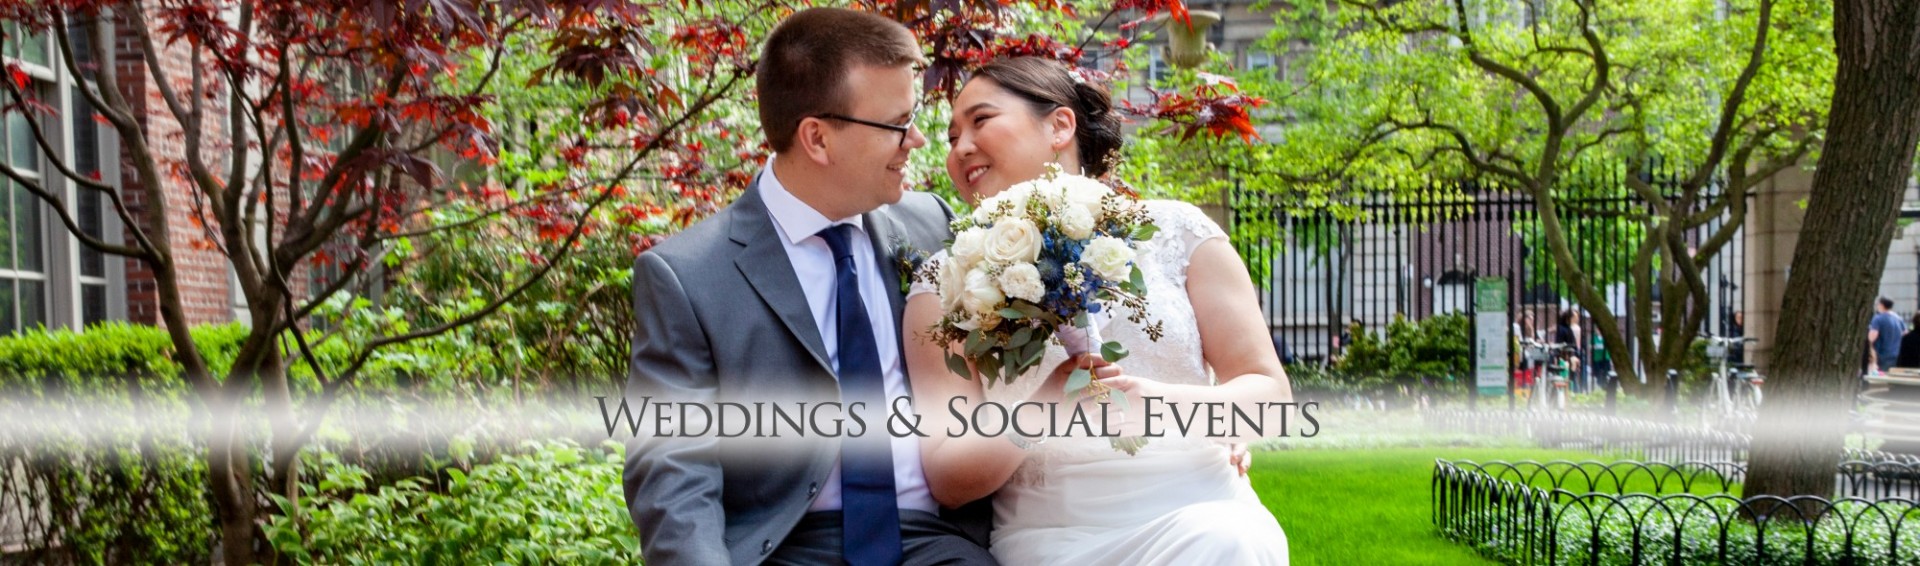 Weddings & Social Events